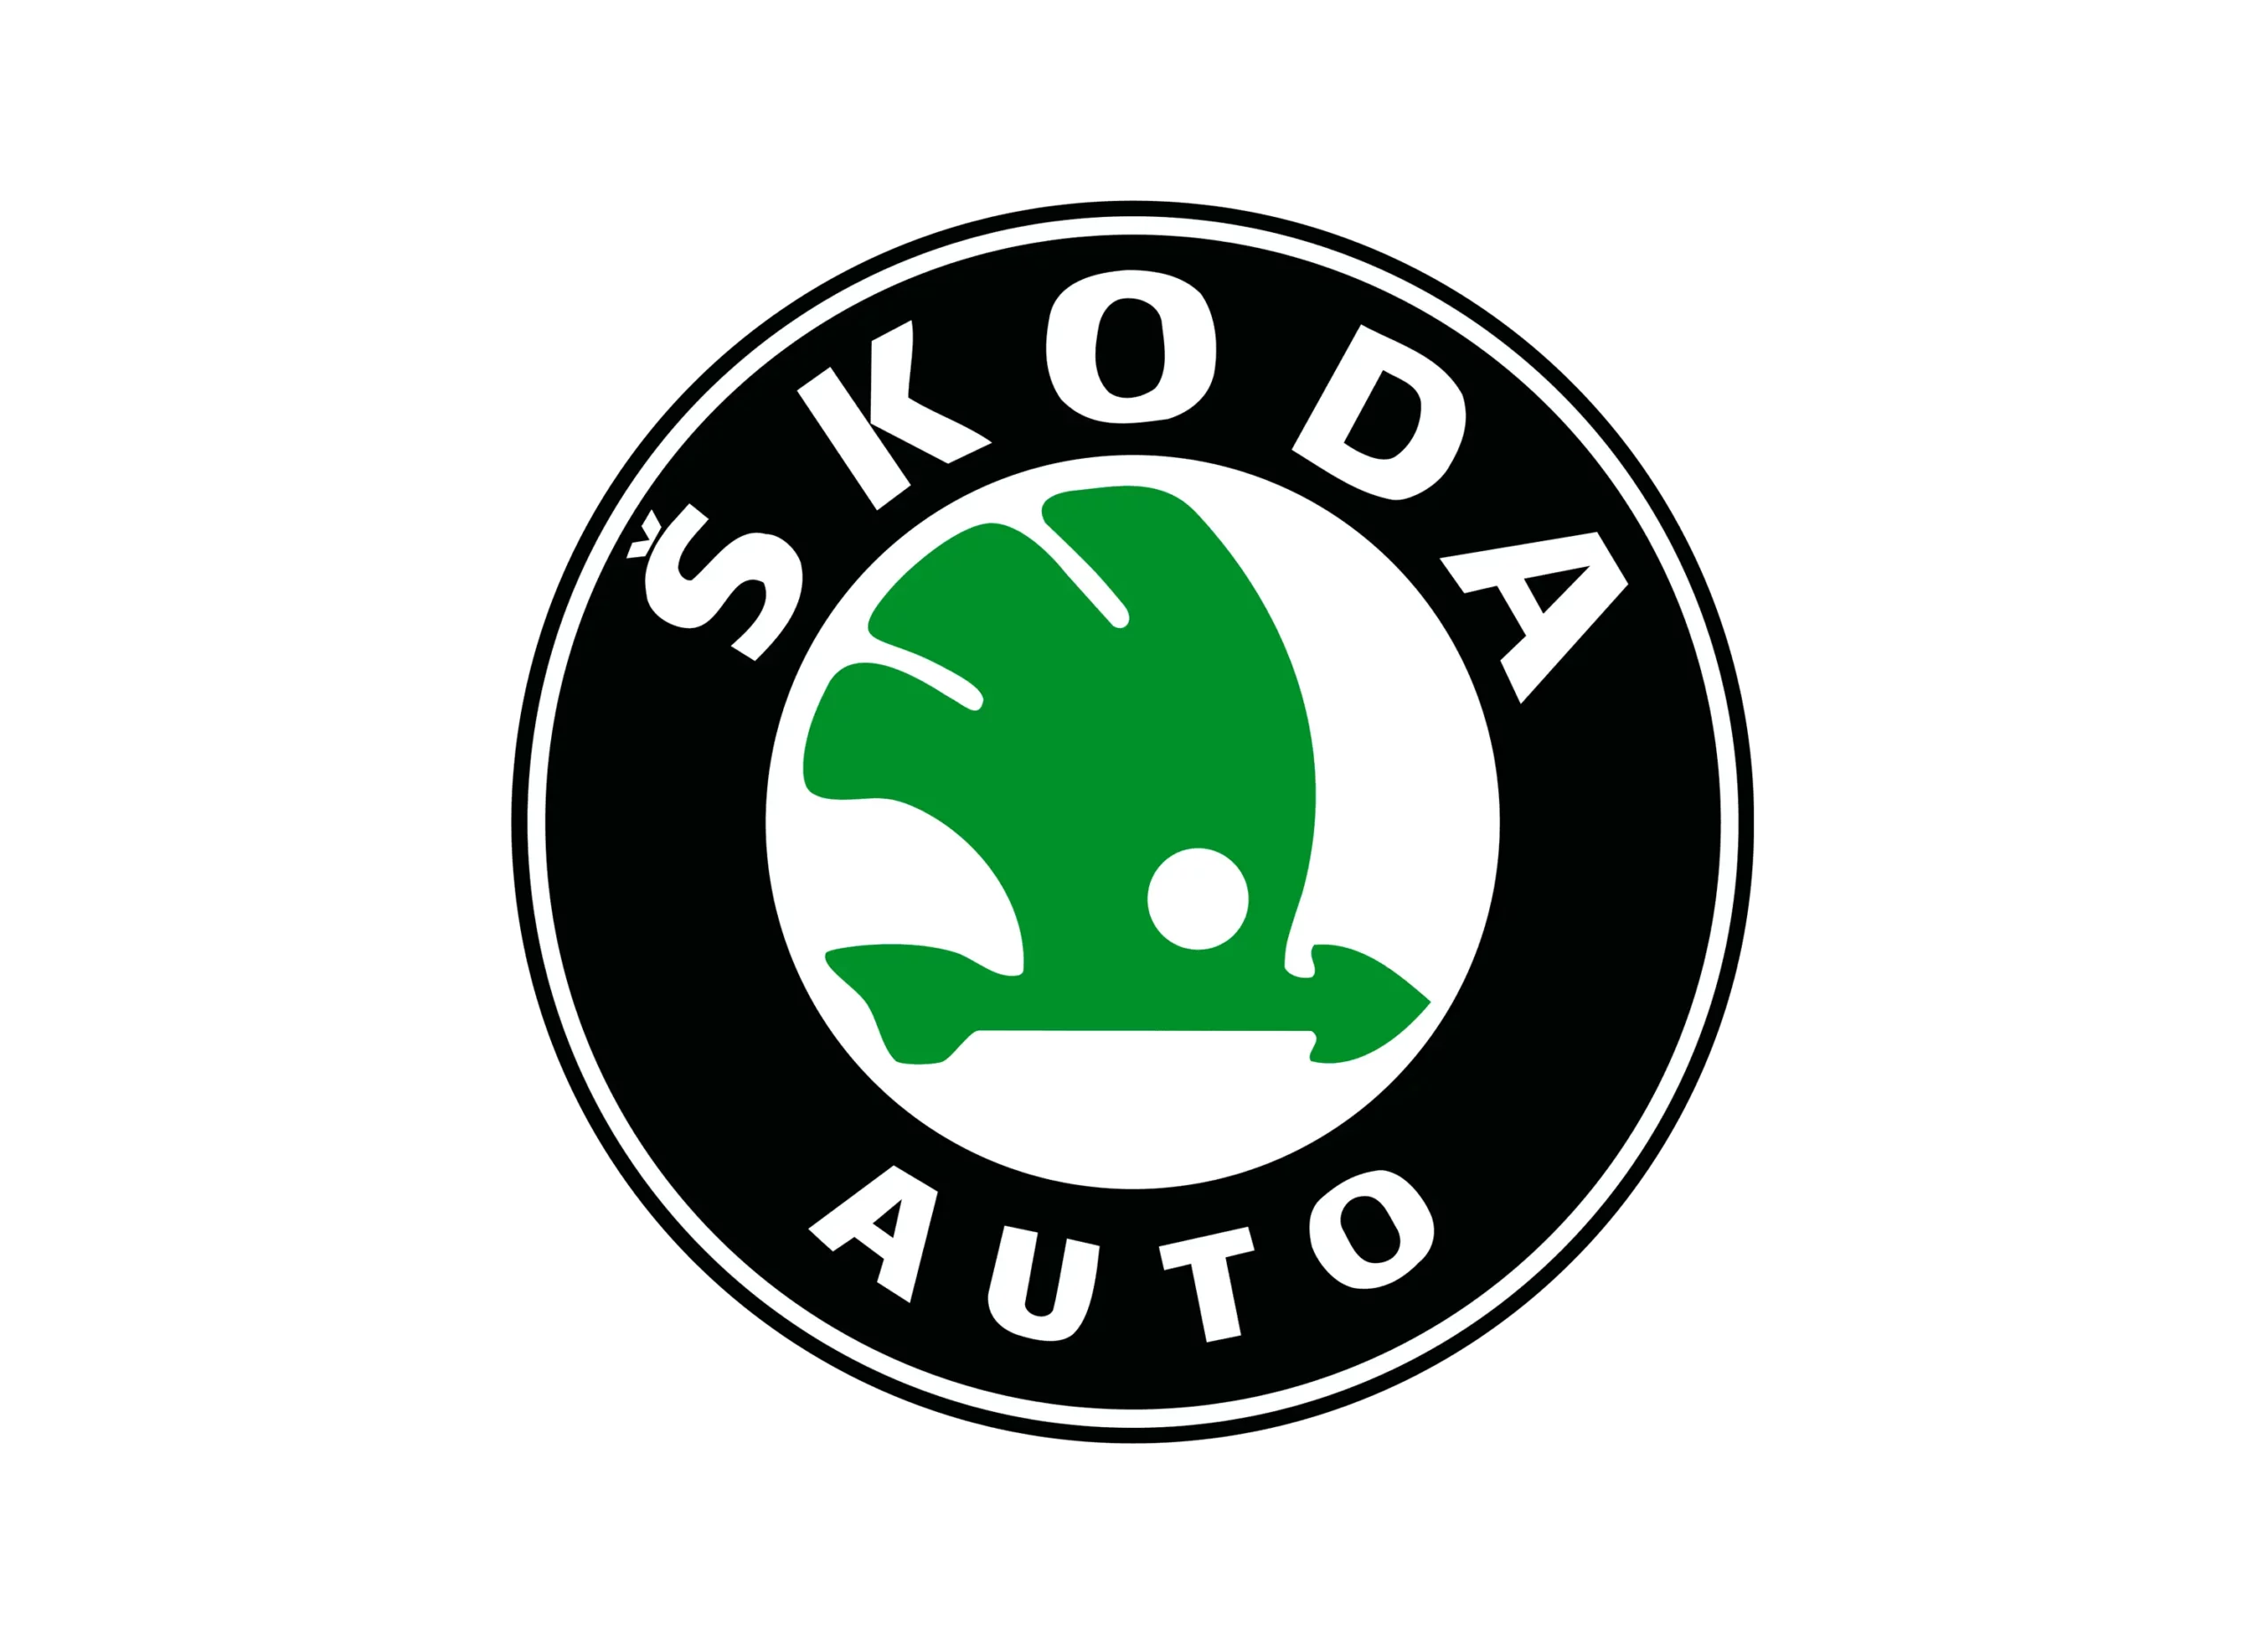 Skoda logo 1986-2011